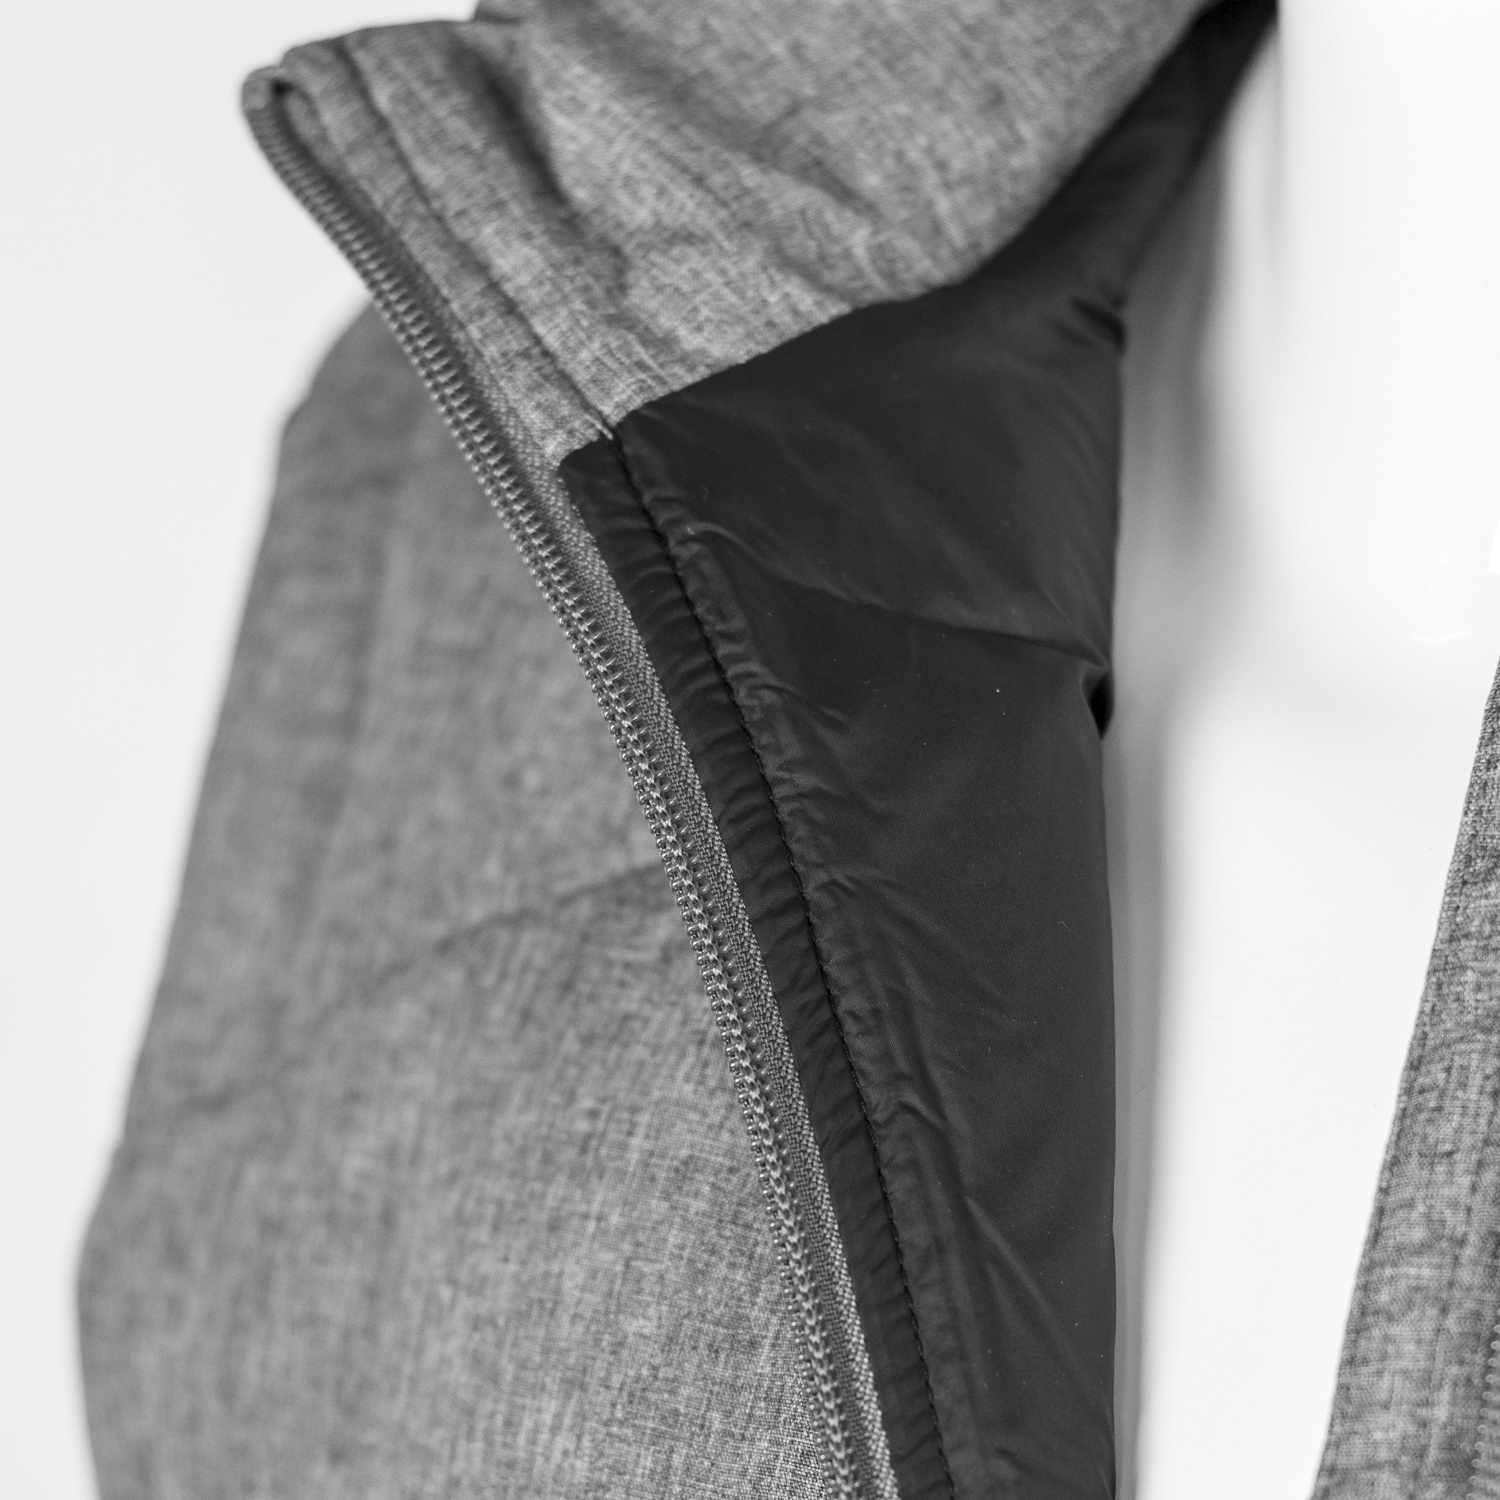 TRENDS | TRENDSWEAR Newport Mens Puffer Vest